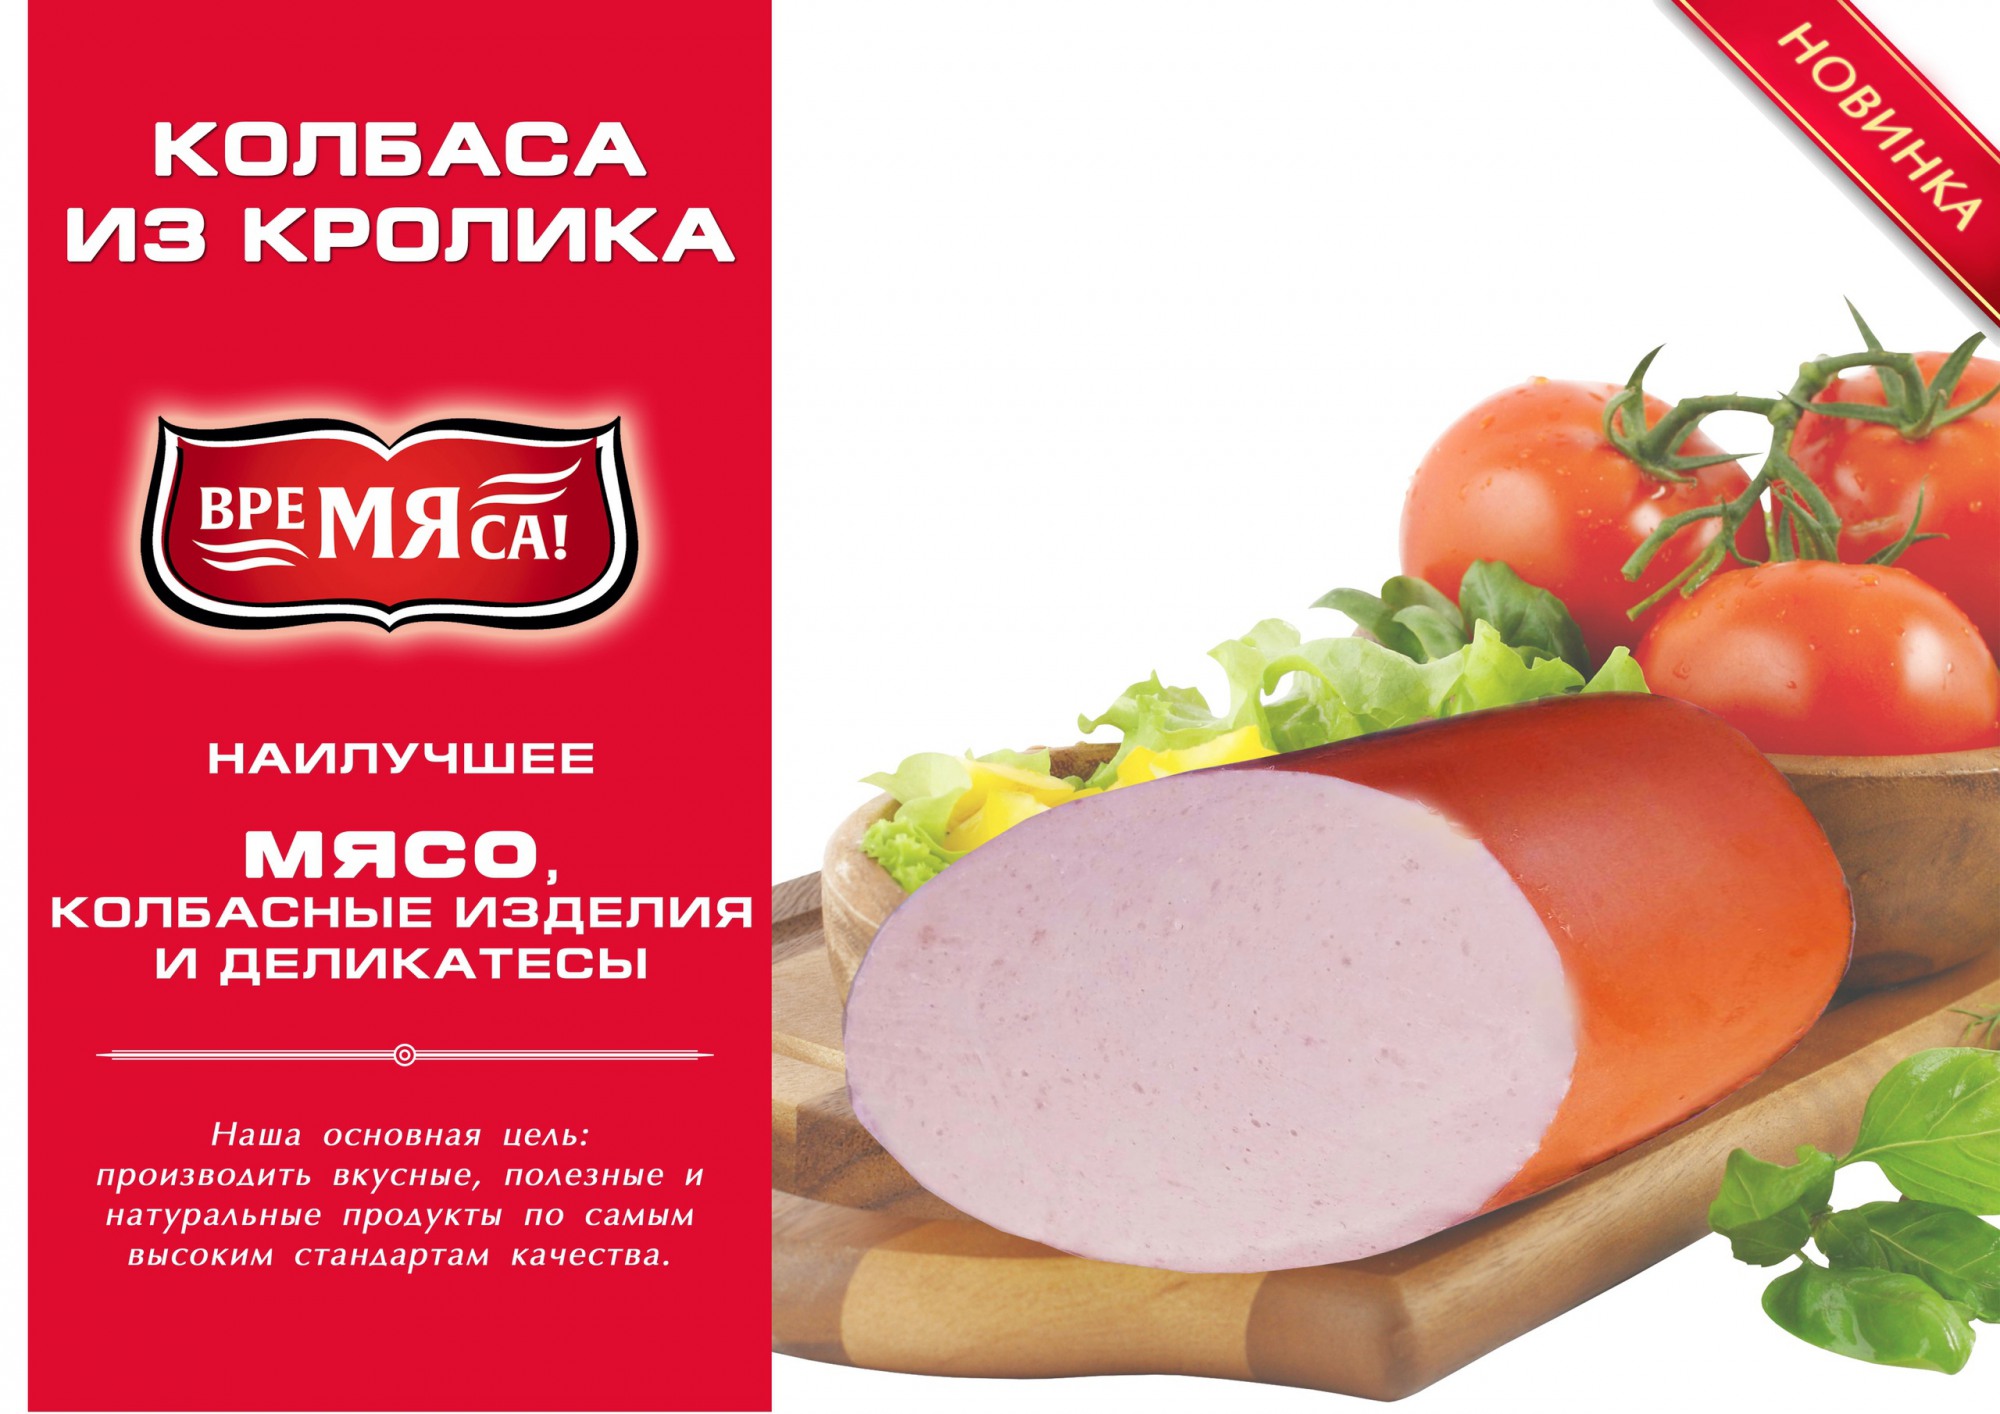 Новинка в «Лебединке»: колбаса из мяса кролика